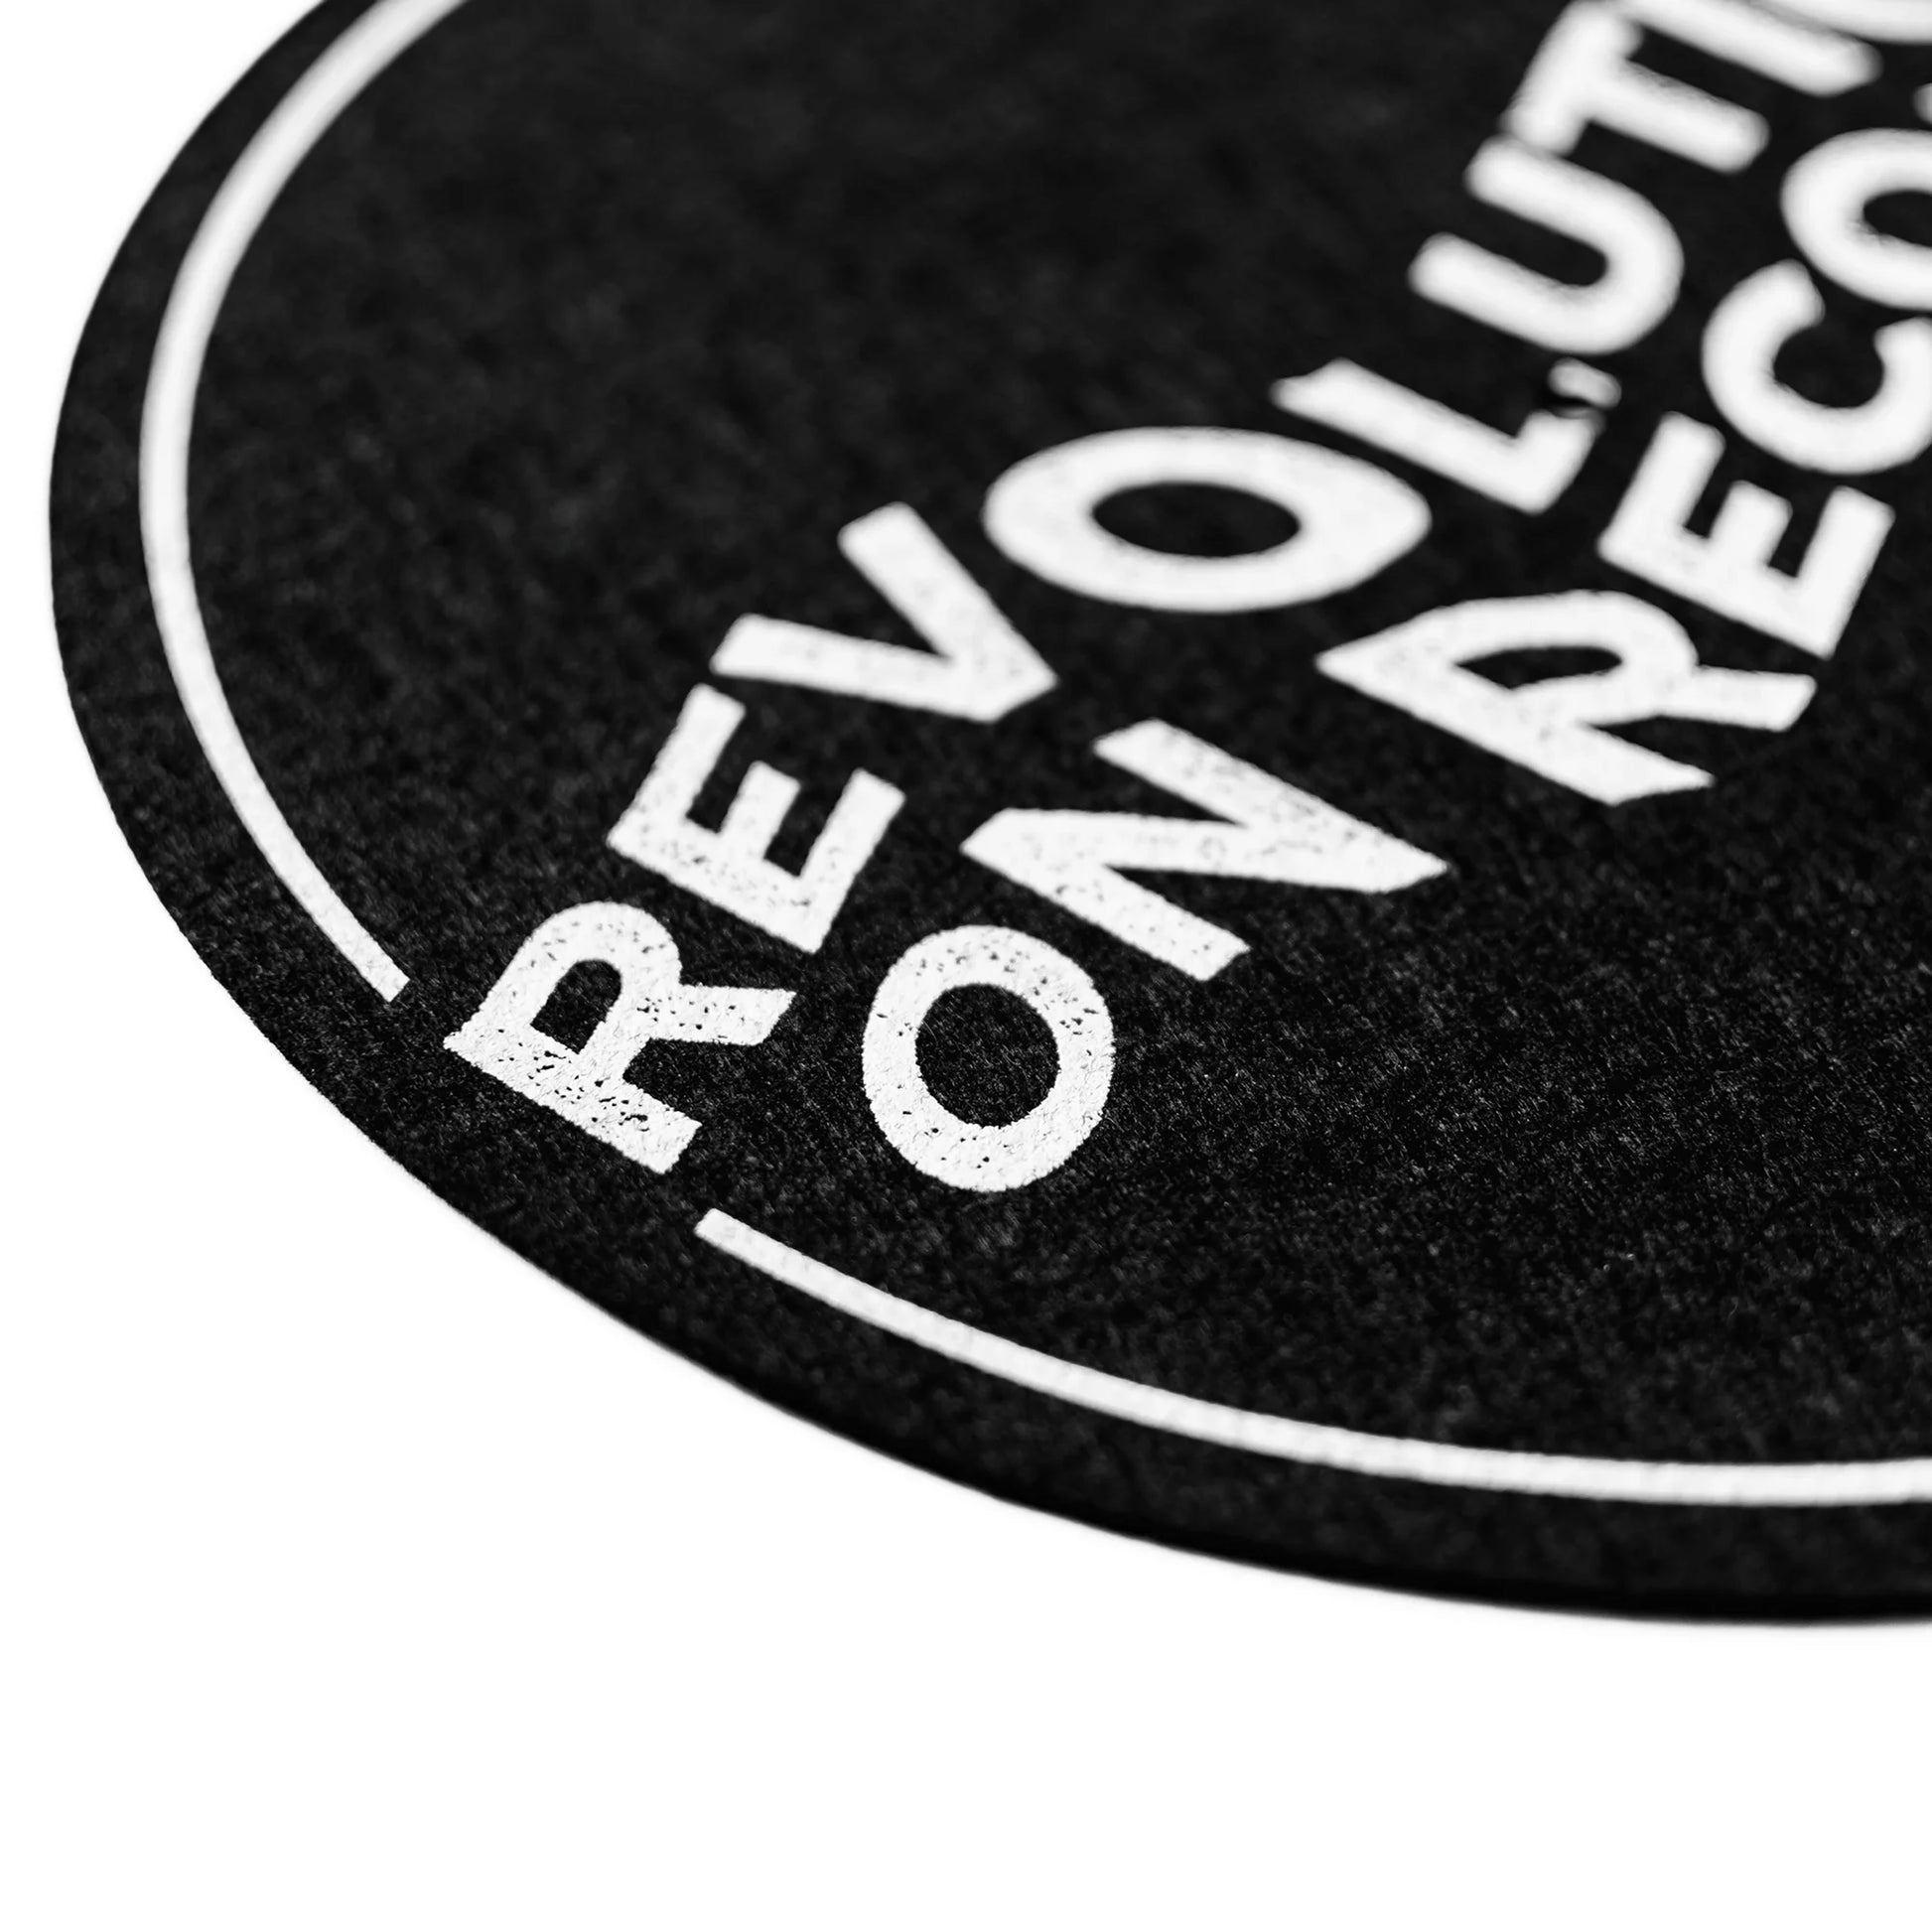 Black felt slipmat for vinyl records close up of print